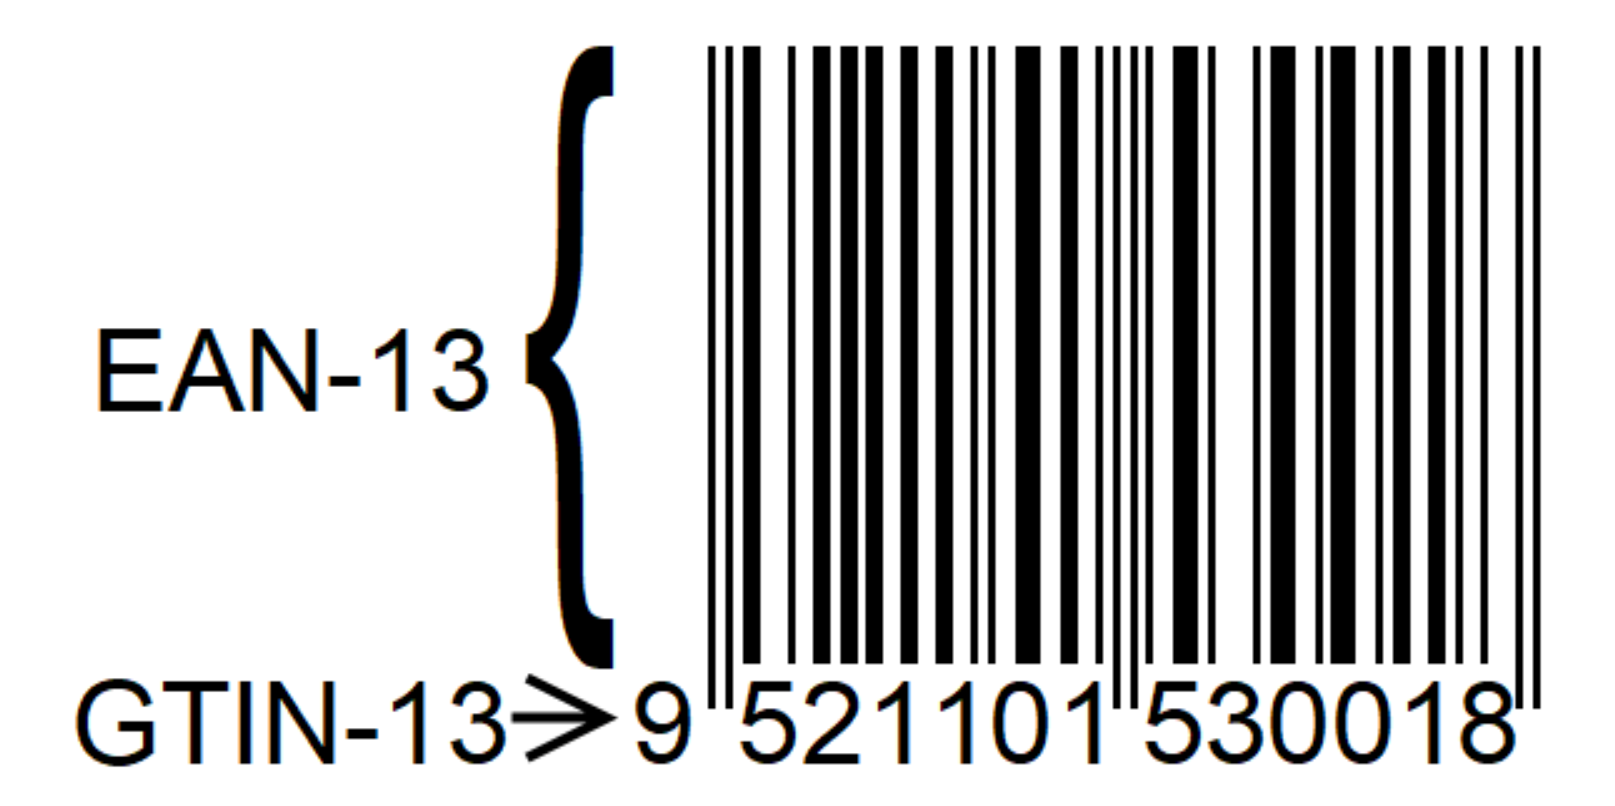 An EAN-13 barcode with the GTIN-13 shown as HRI underneath